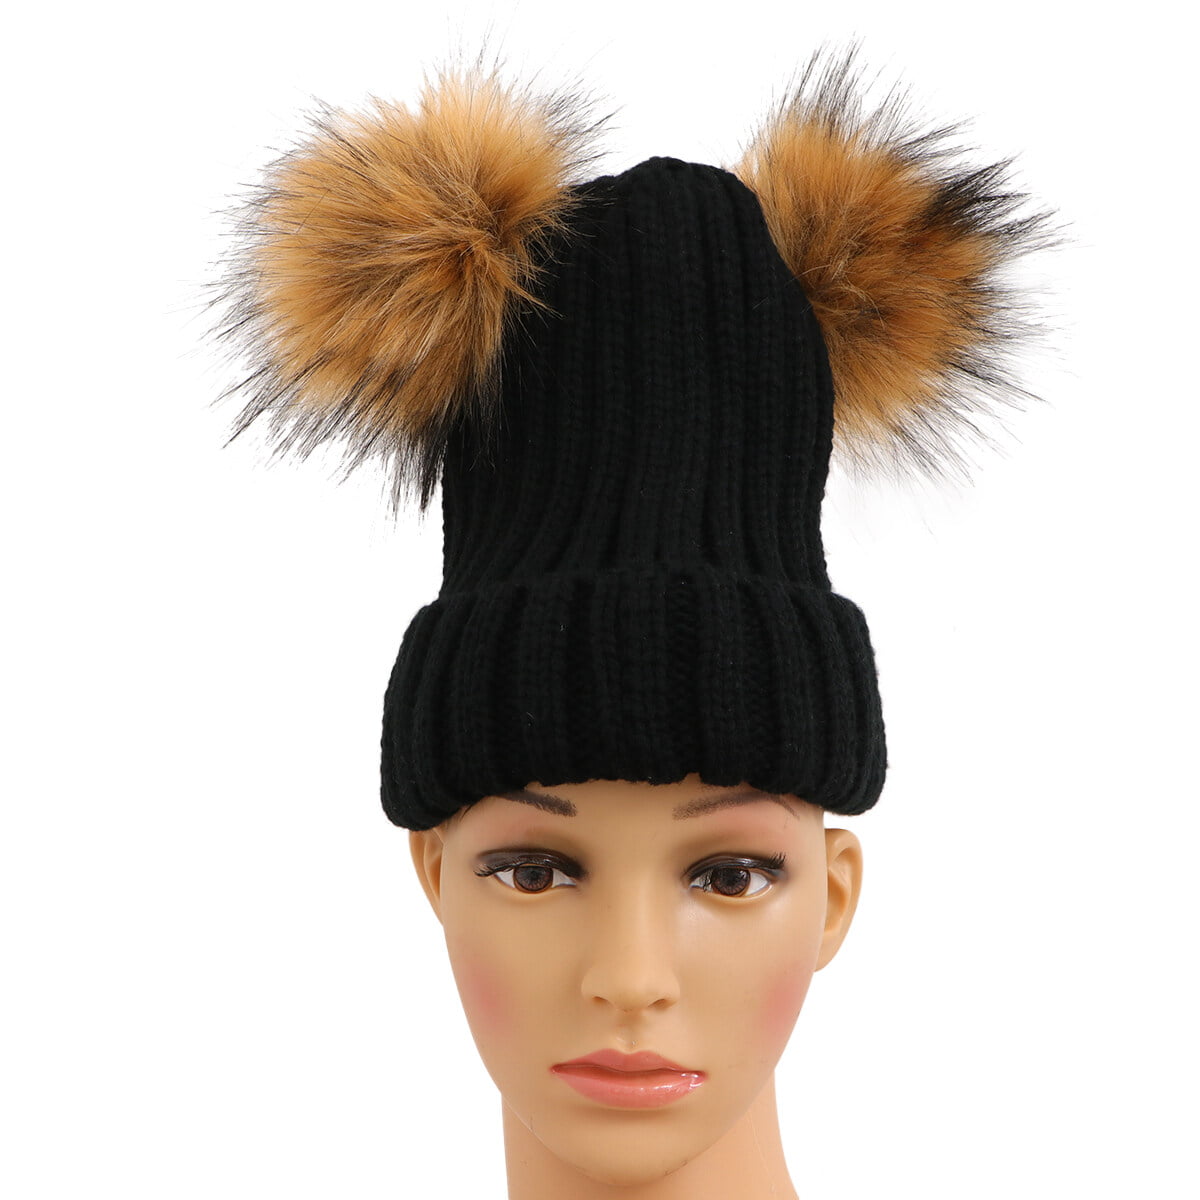 Winter Knit Beanie Hat with Double Pom Pom Ears for Women Girls (Black) 